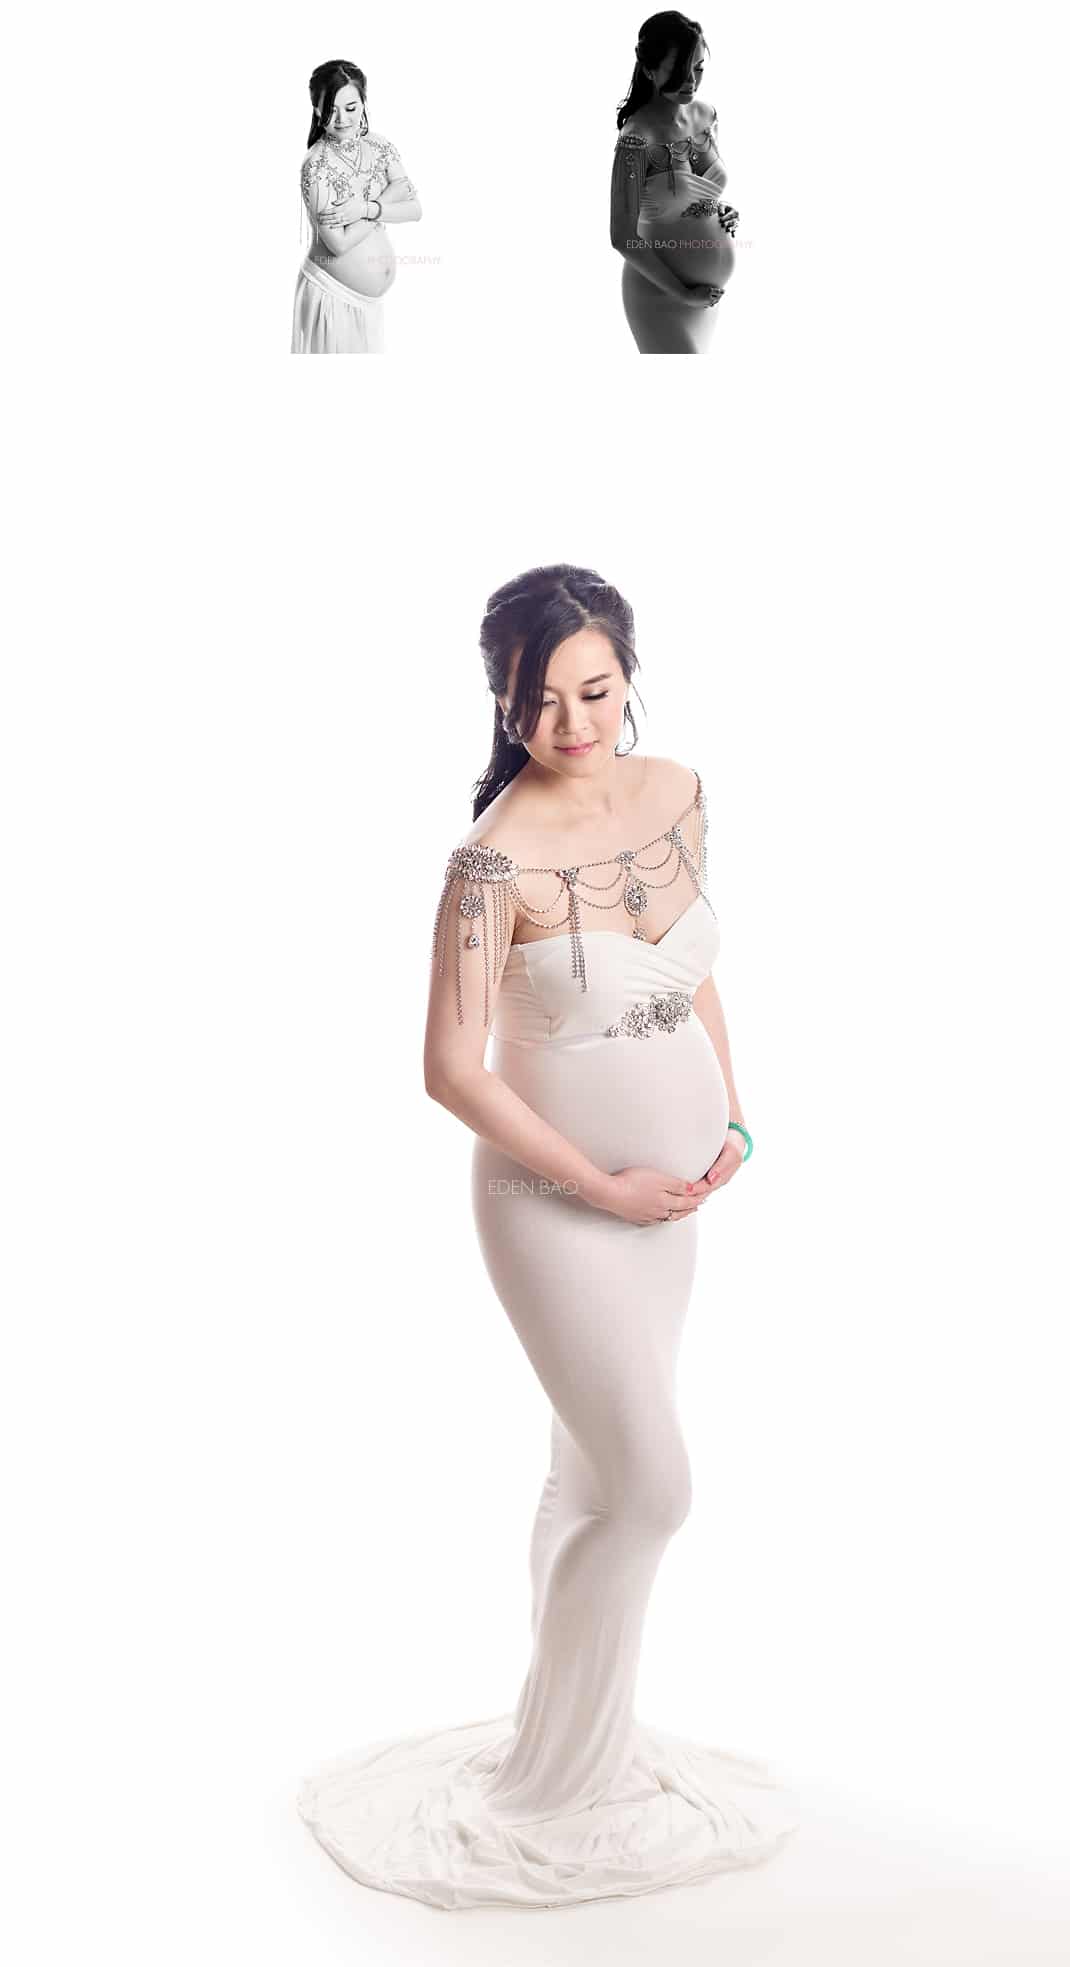 Everett Maternity Photographer high key white background